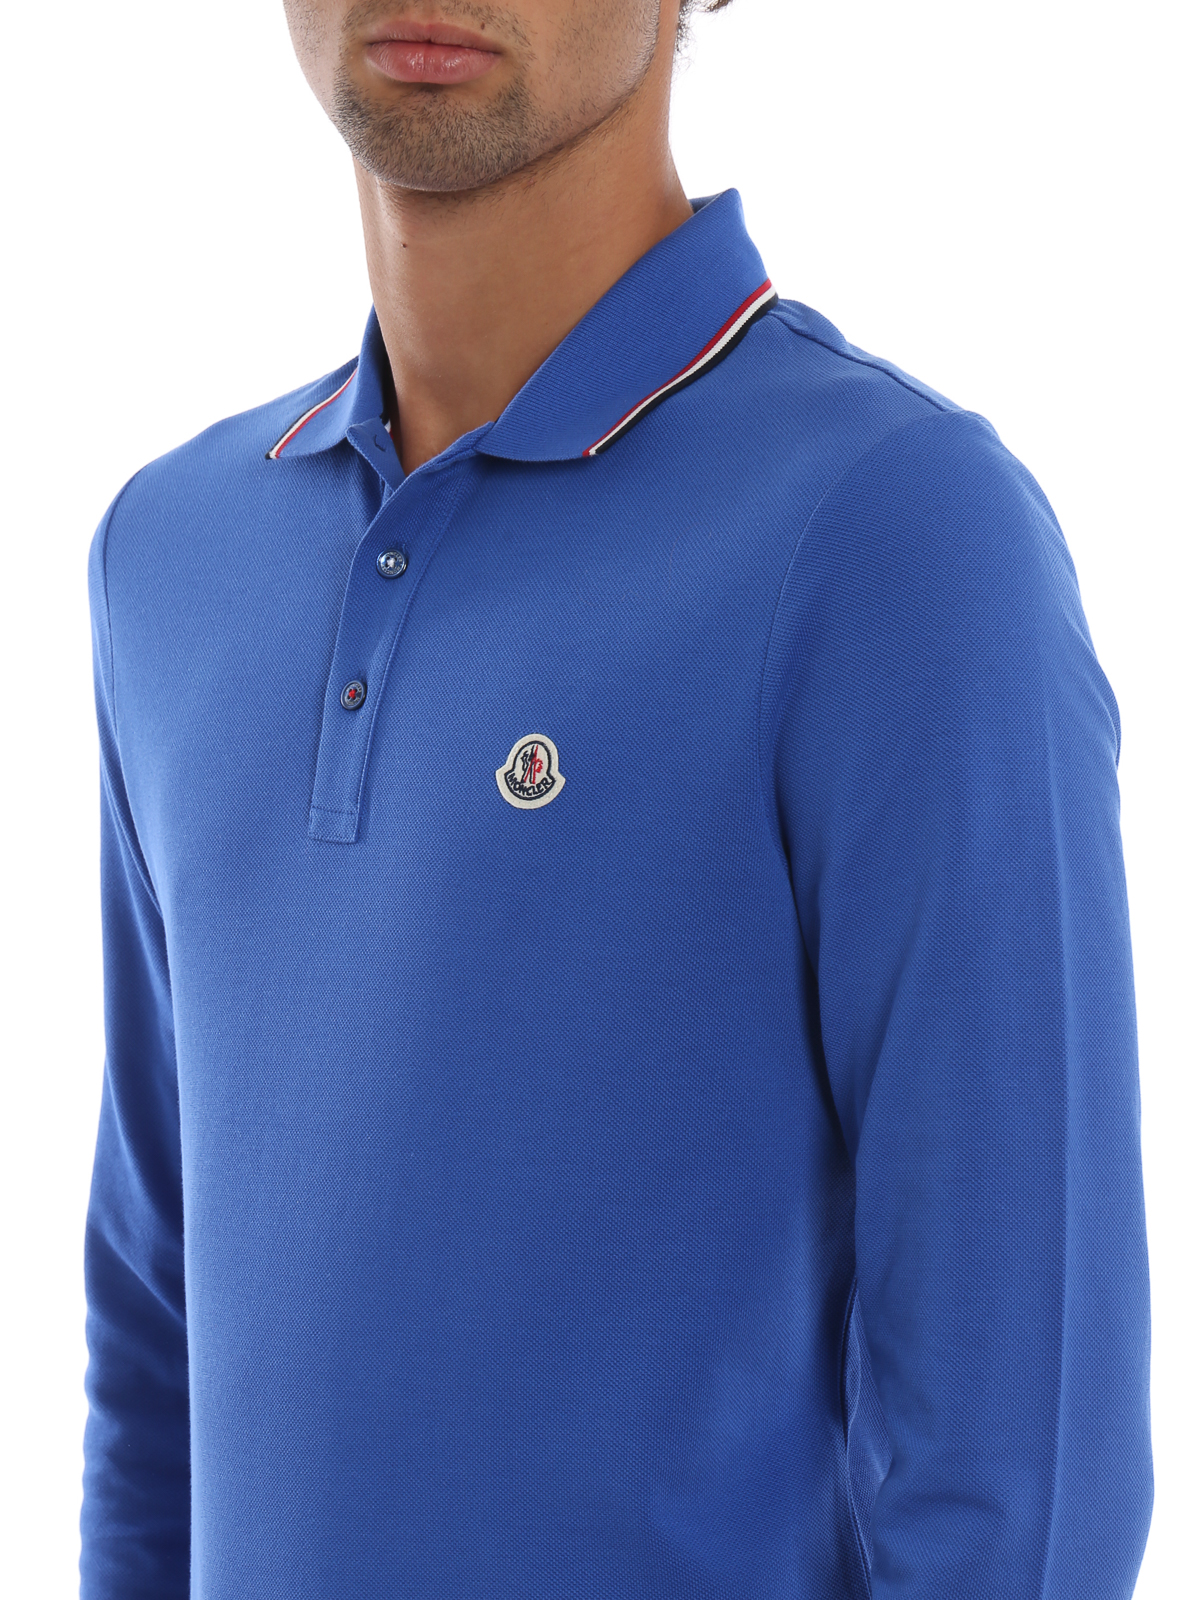 Royal Blue Polo Shirts Long Sleeve | canoeracing.org.uk